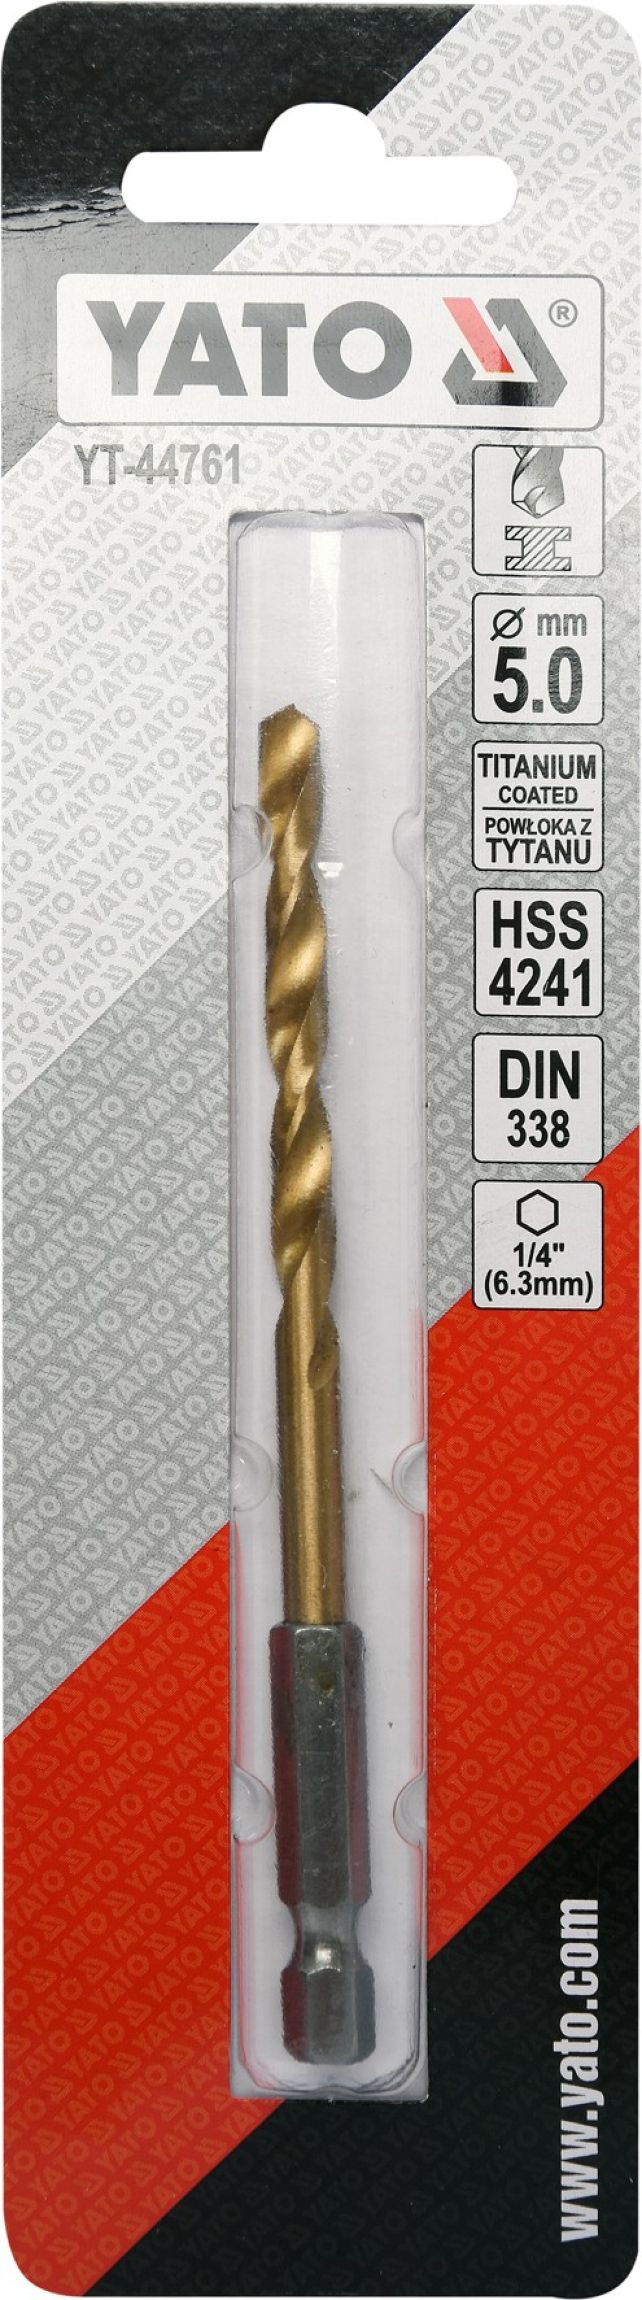 Vrtk do kovu HSS-titan 4,8mm se estihranou stopkou 1/4" Yato YT-44760